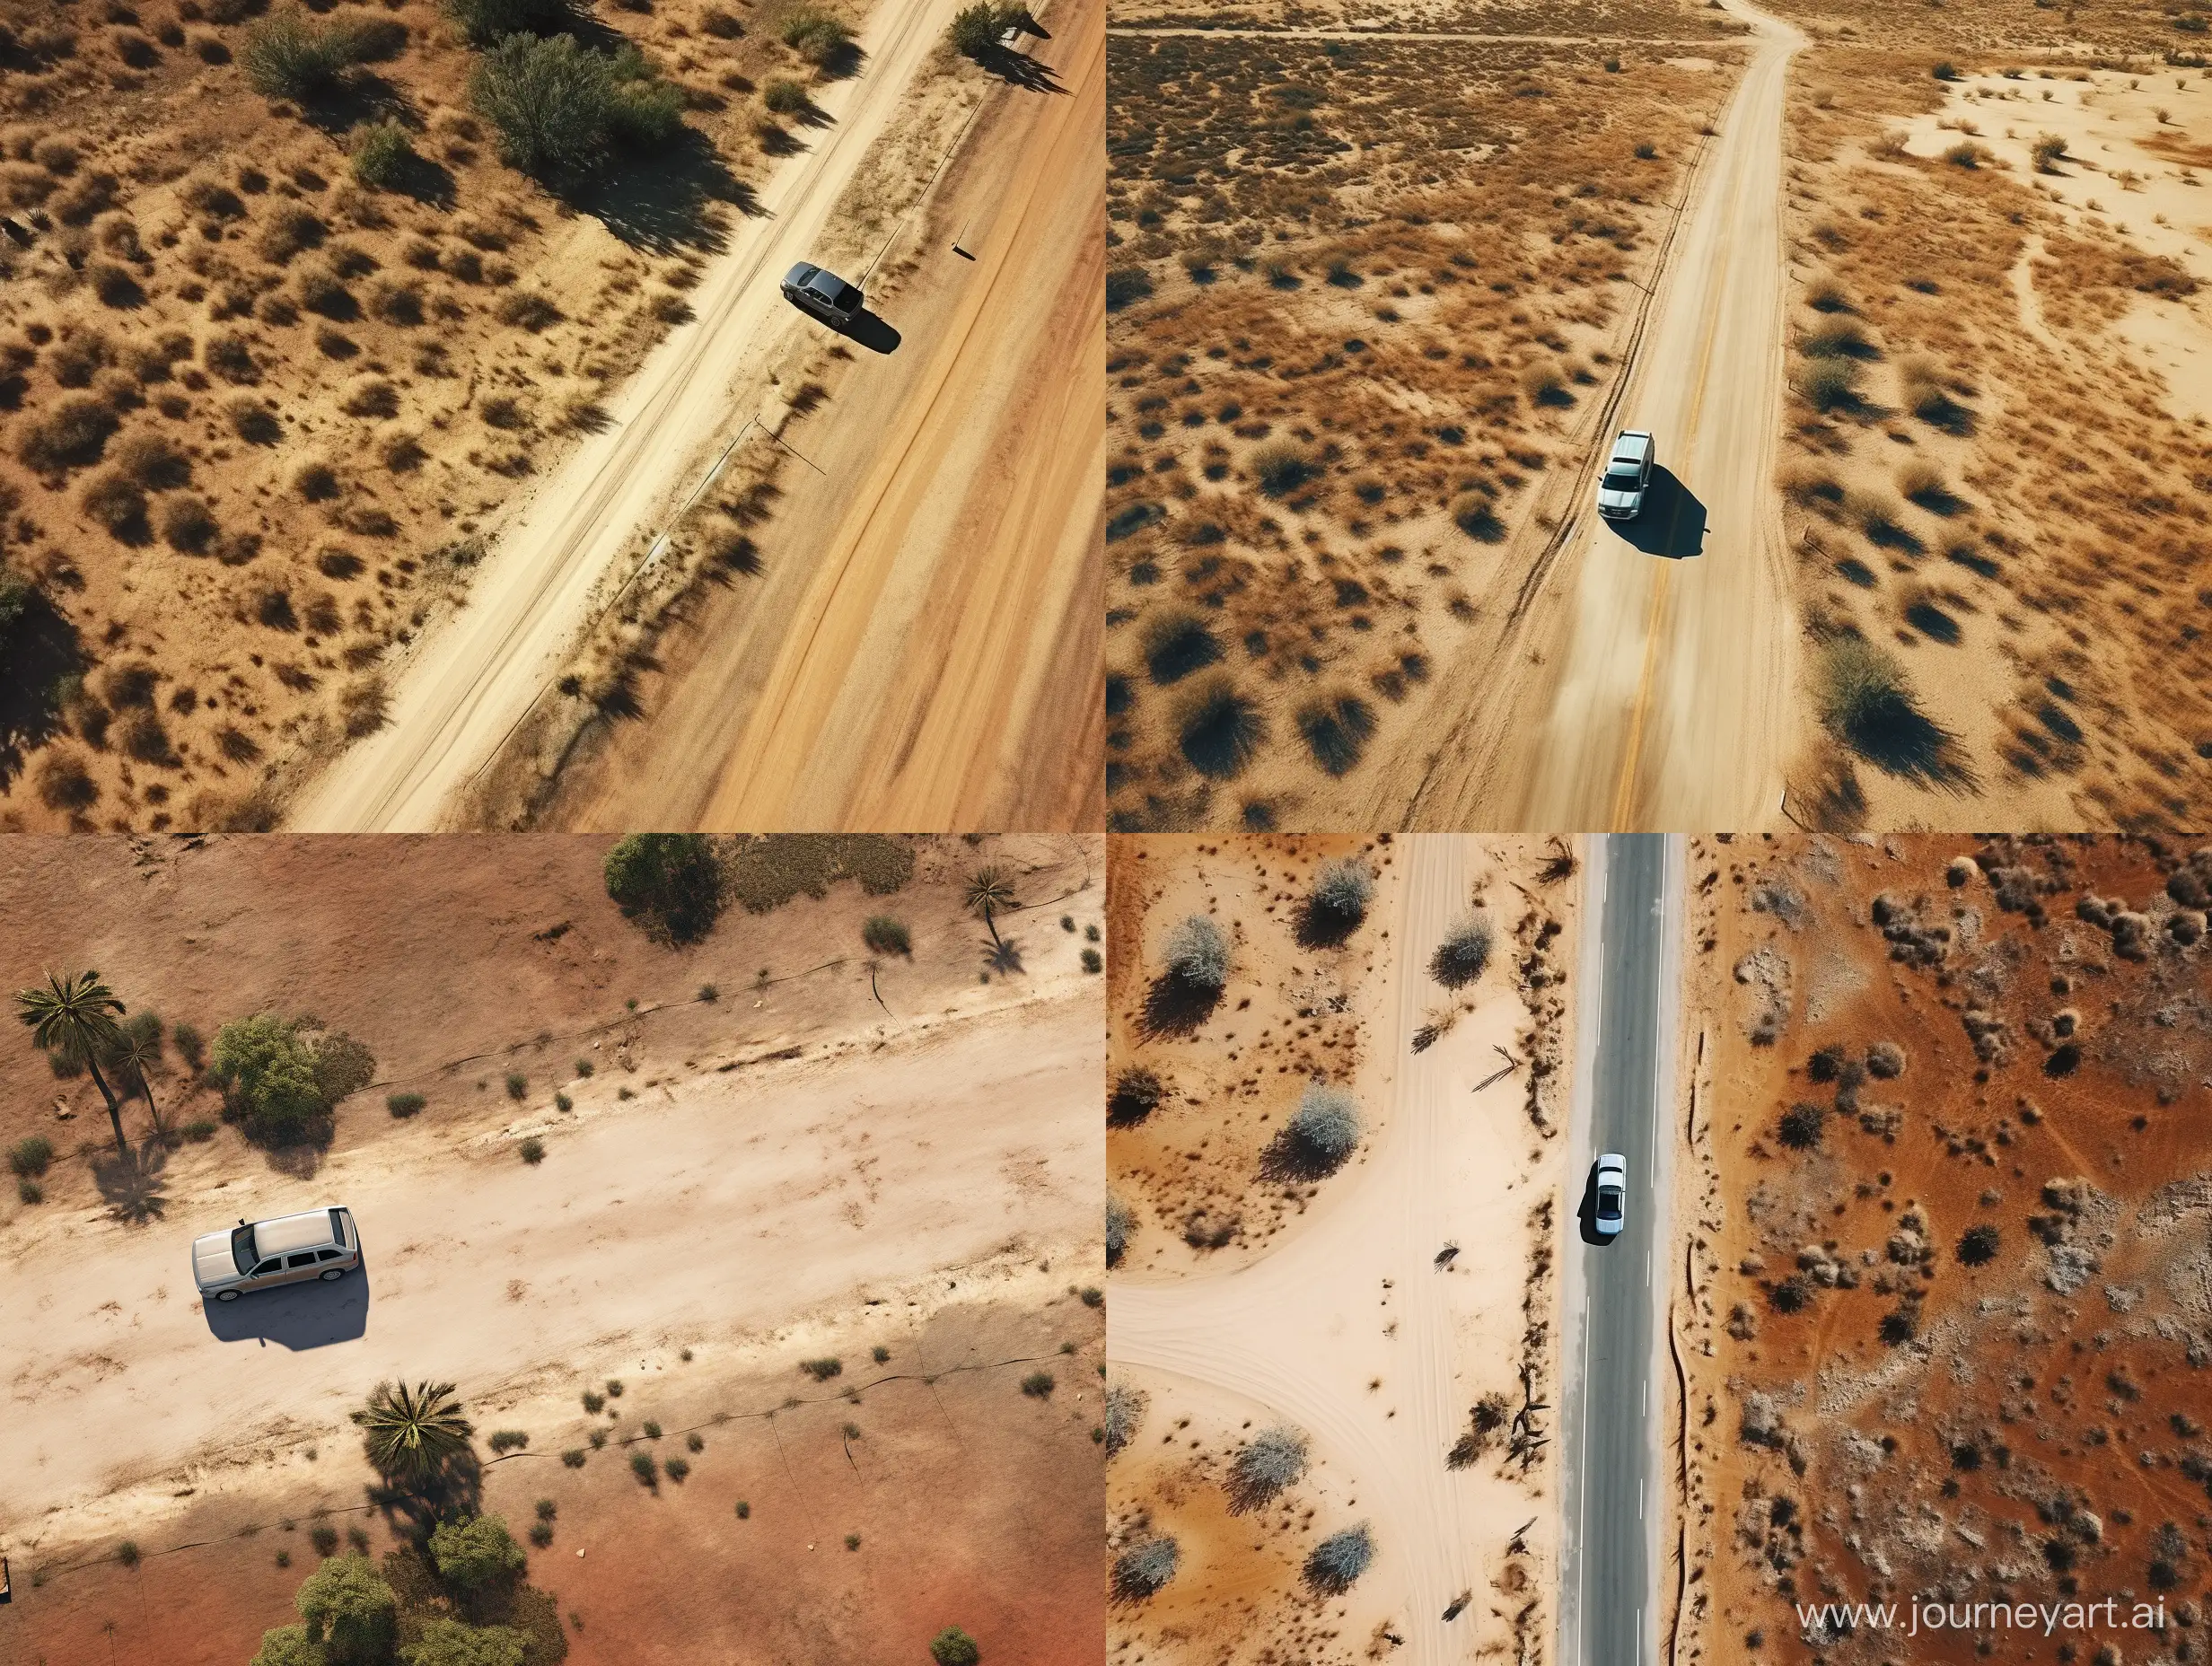 Scenic-Desert-Drive-Aerial-View-of-Asphalt-Road-Cars-and-Sunlit-Landscape